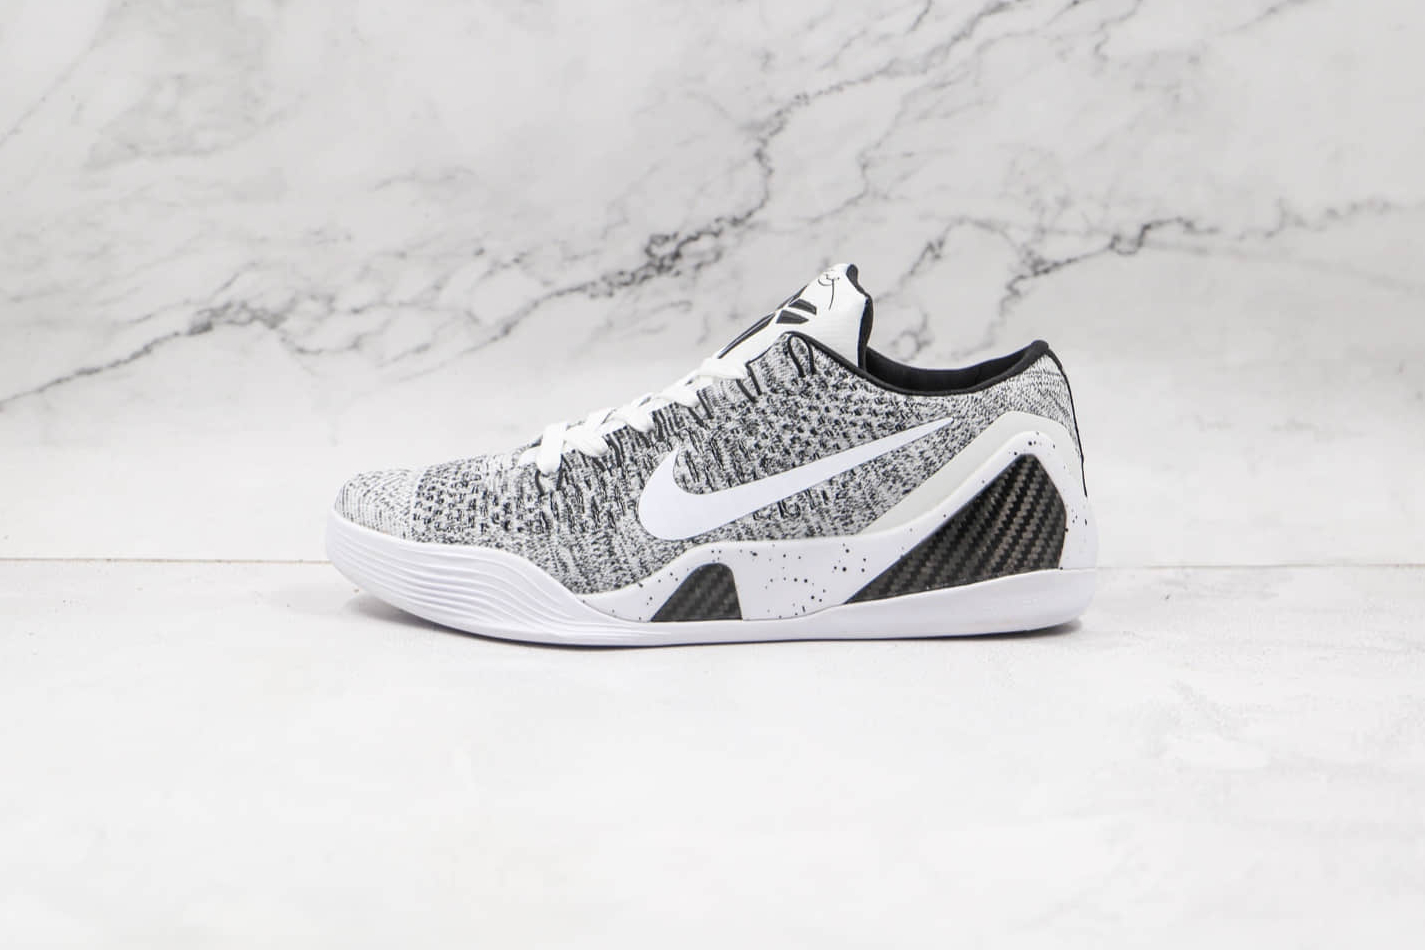 Nike Kobe 9 Elite Low XDR 'Beethoven' 653456-101 | Stylish and High-performance Basketball Shoes